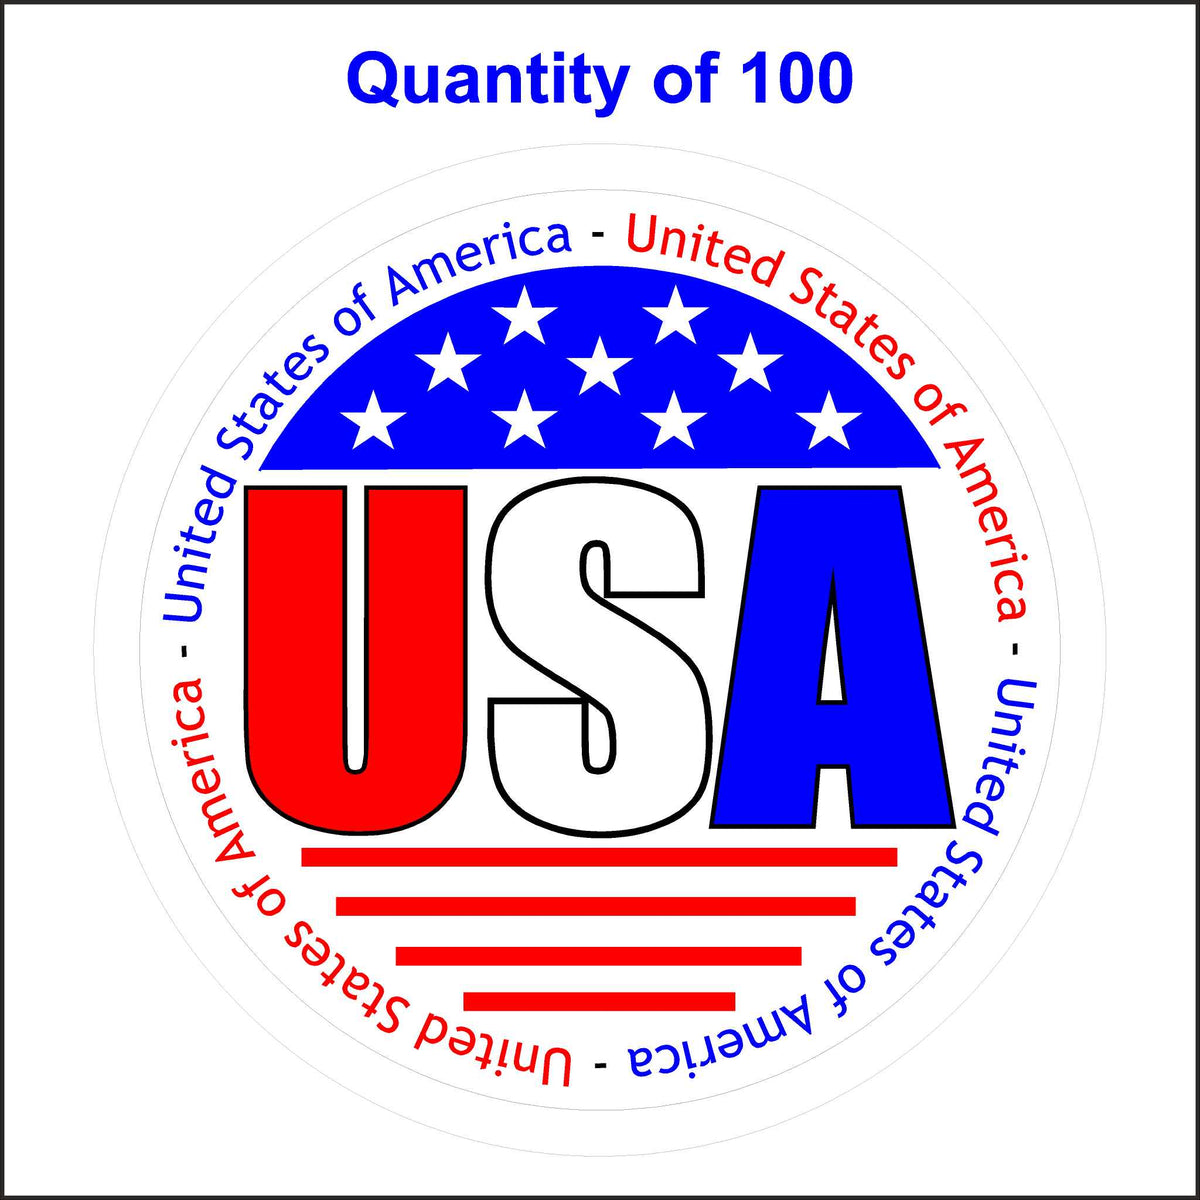 Red, White, and Blue USA Sticker - United States of America Sticker - Patriotic Sticker. 100 Quantity.